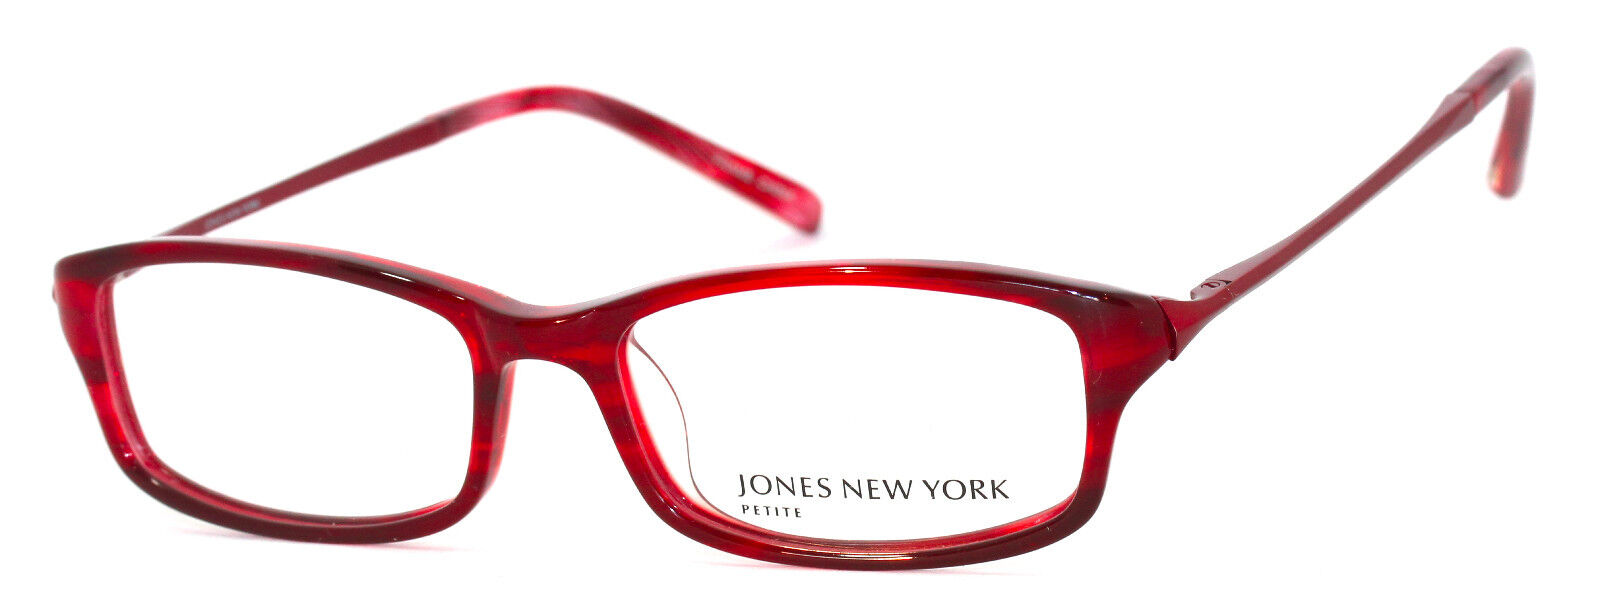 Jones New York Ophthalmic Plastic Rectangle Eyewear Frame,  J213 Red